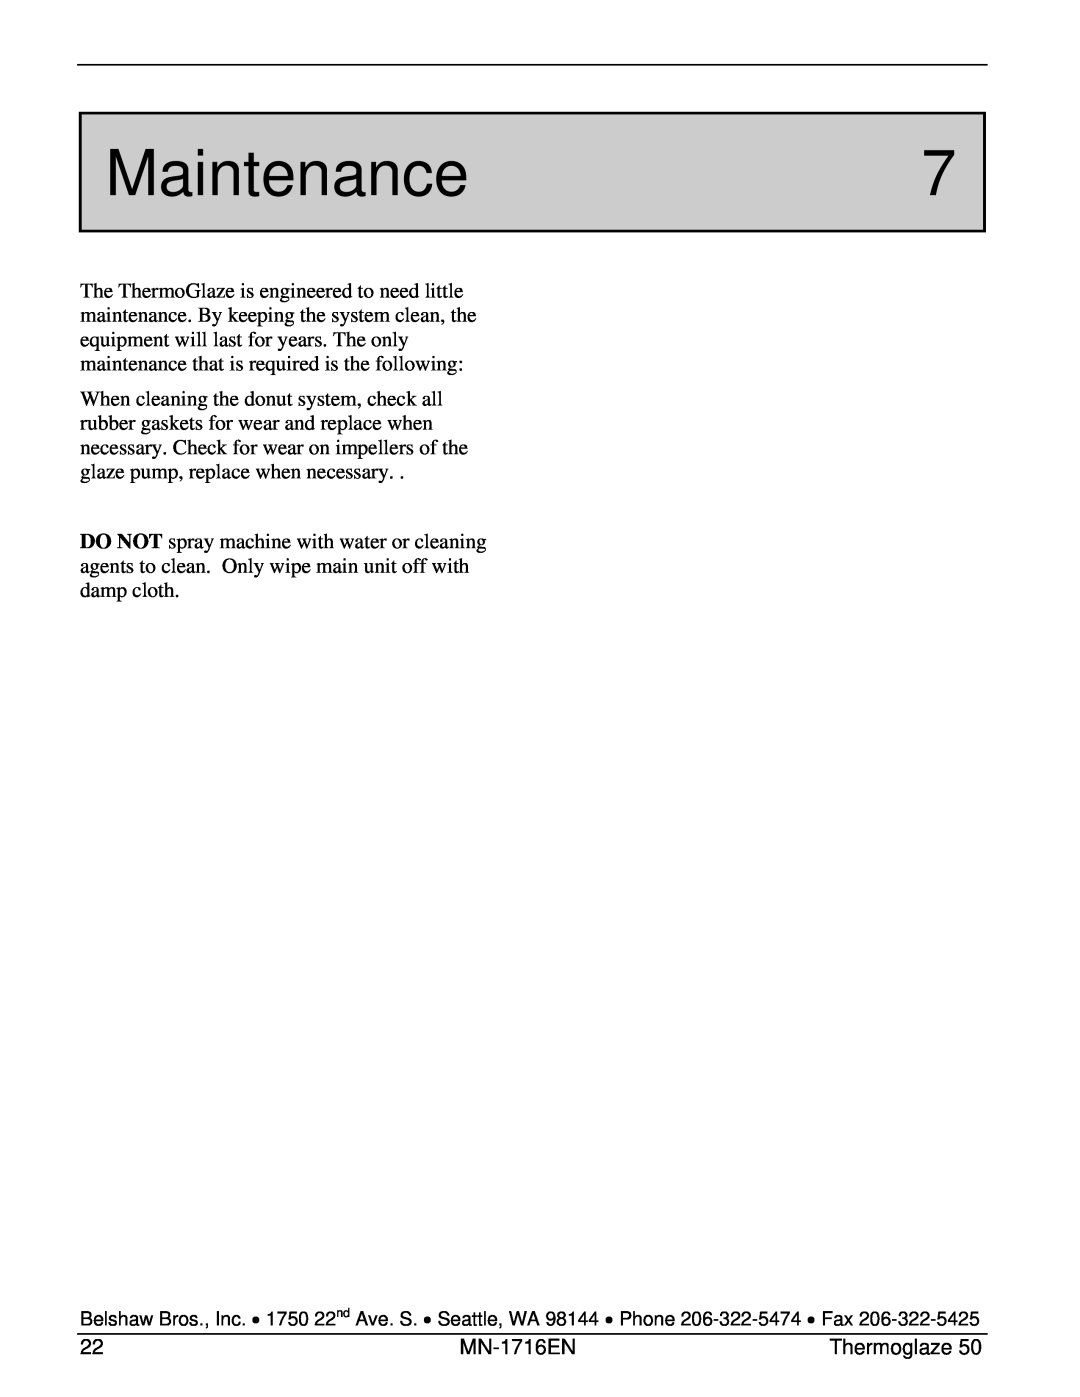 Belshaw Brothers TG 50 manual Maintenance7 